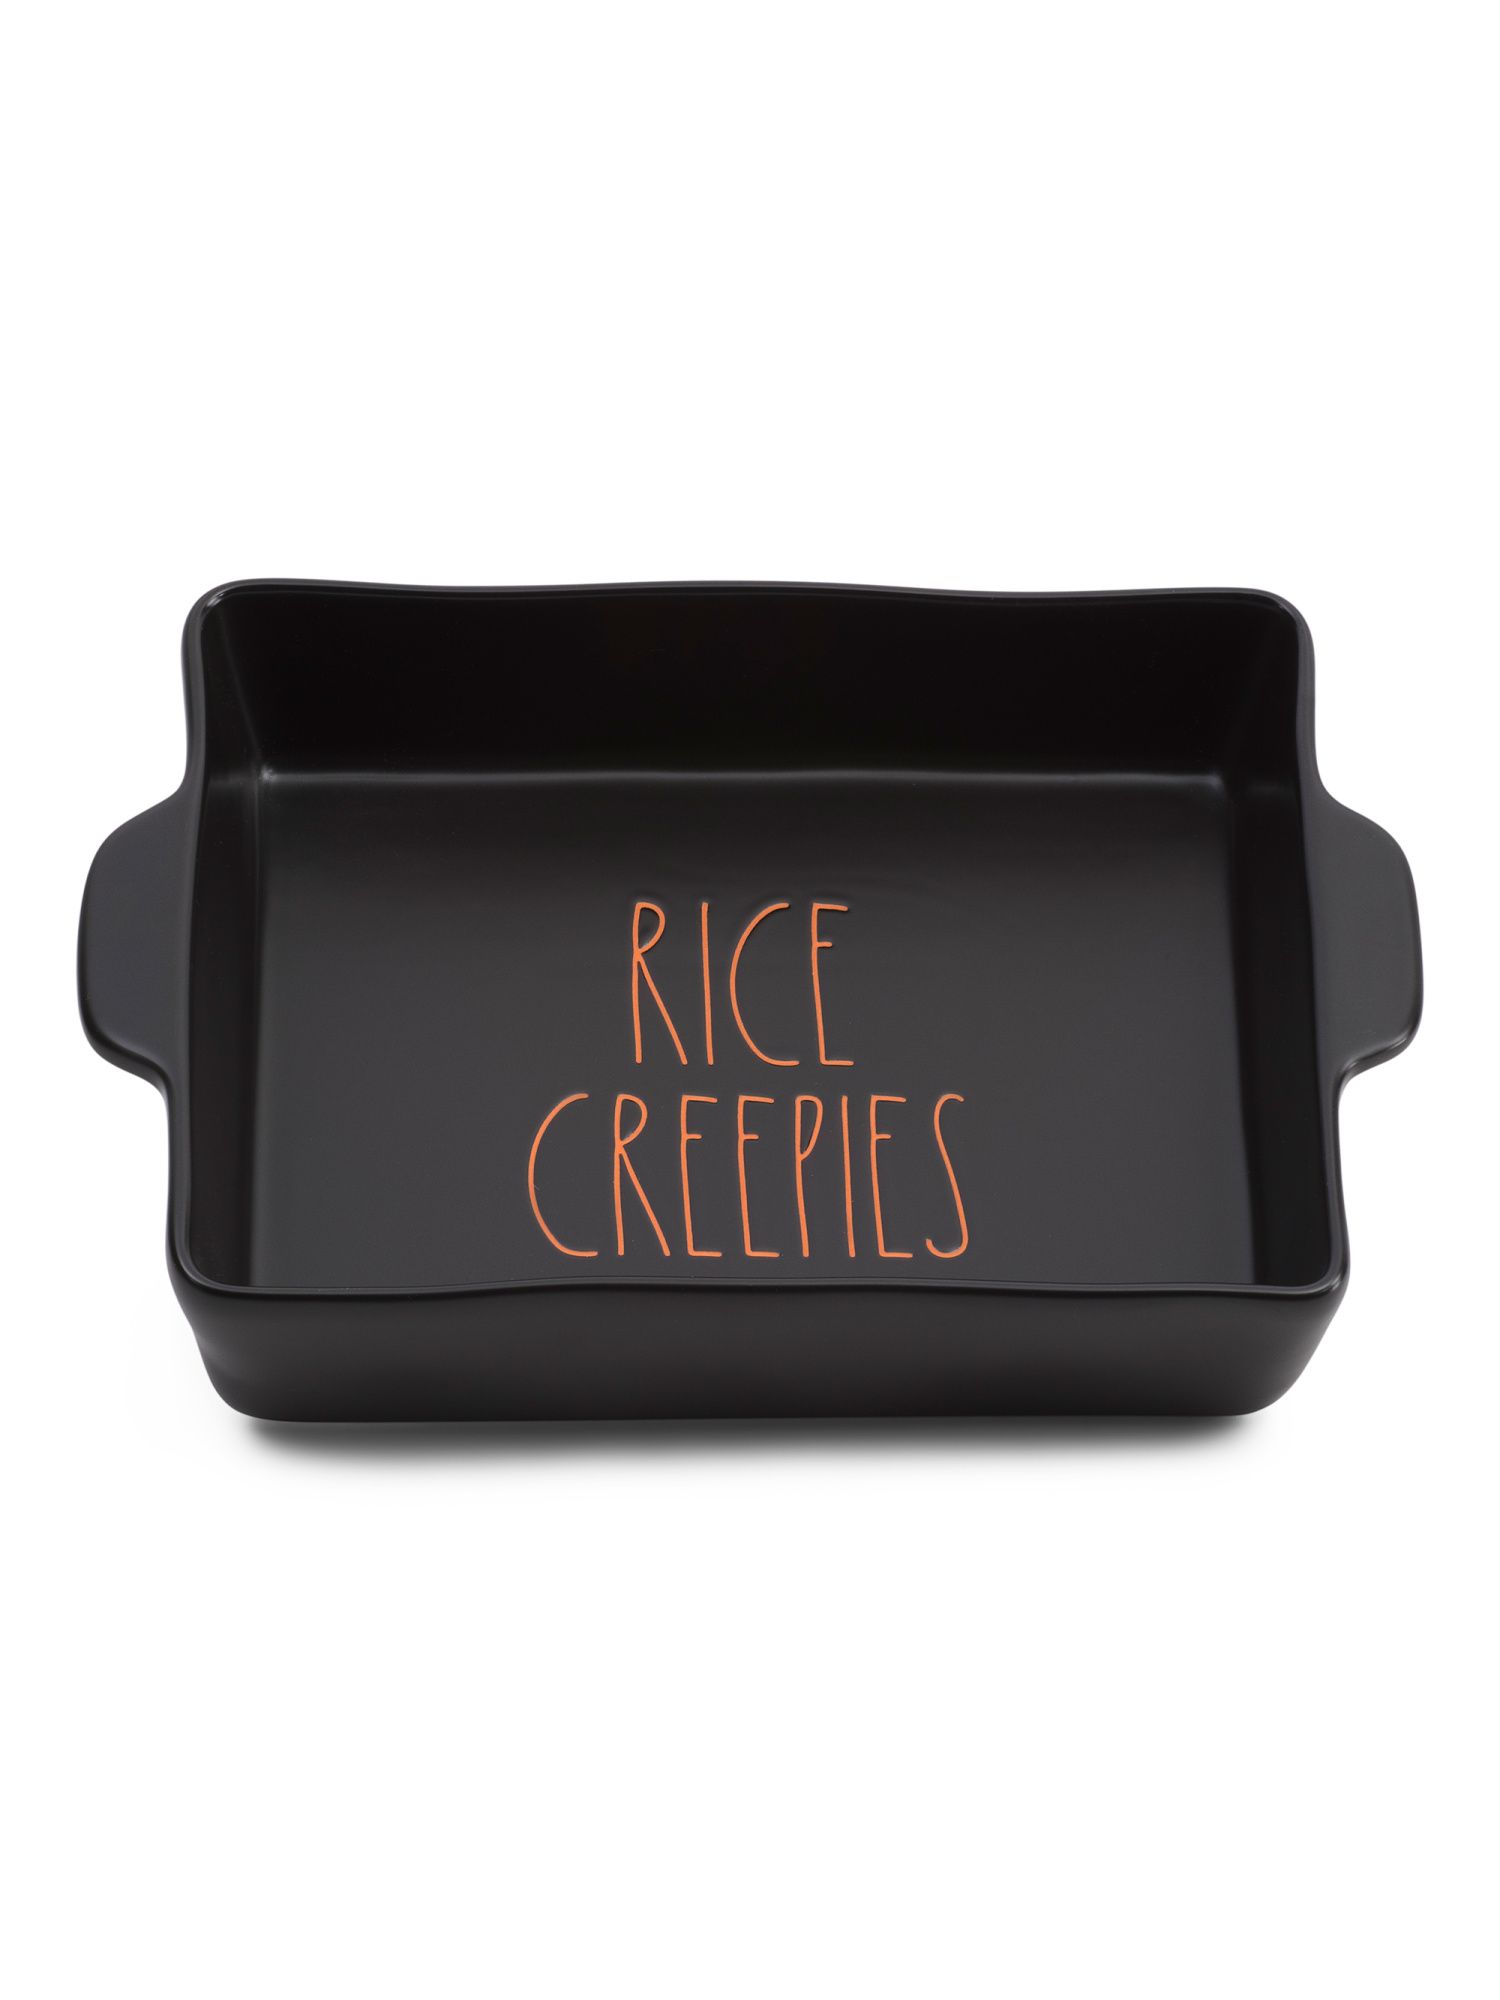 Rice Creepies Baker | TJ Maxx